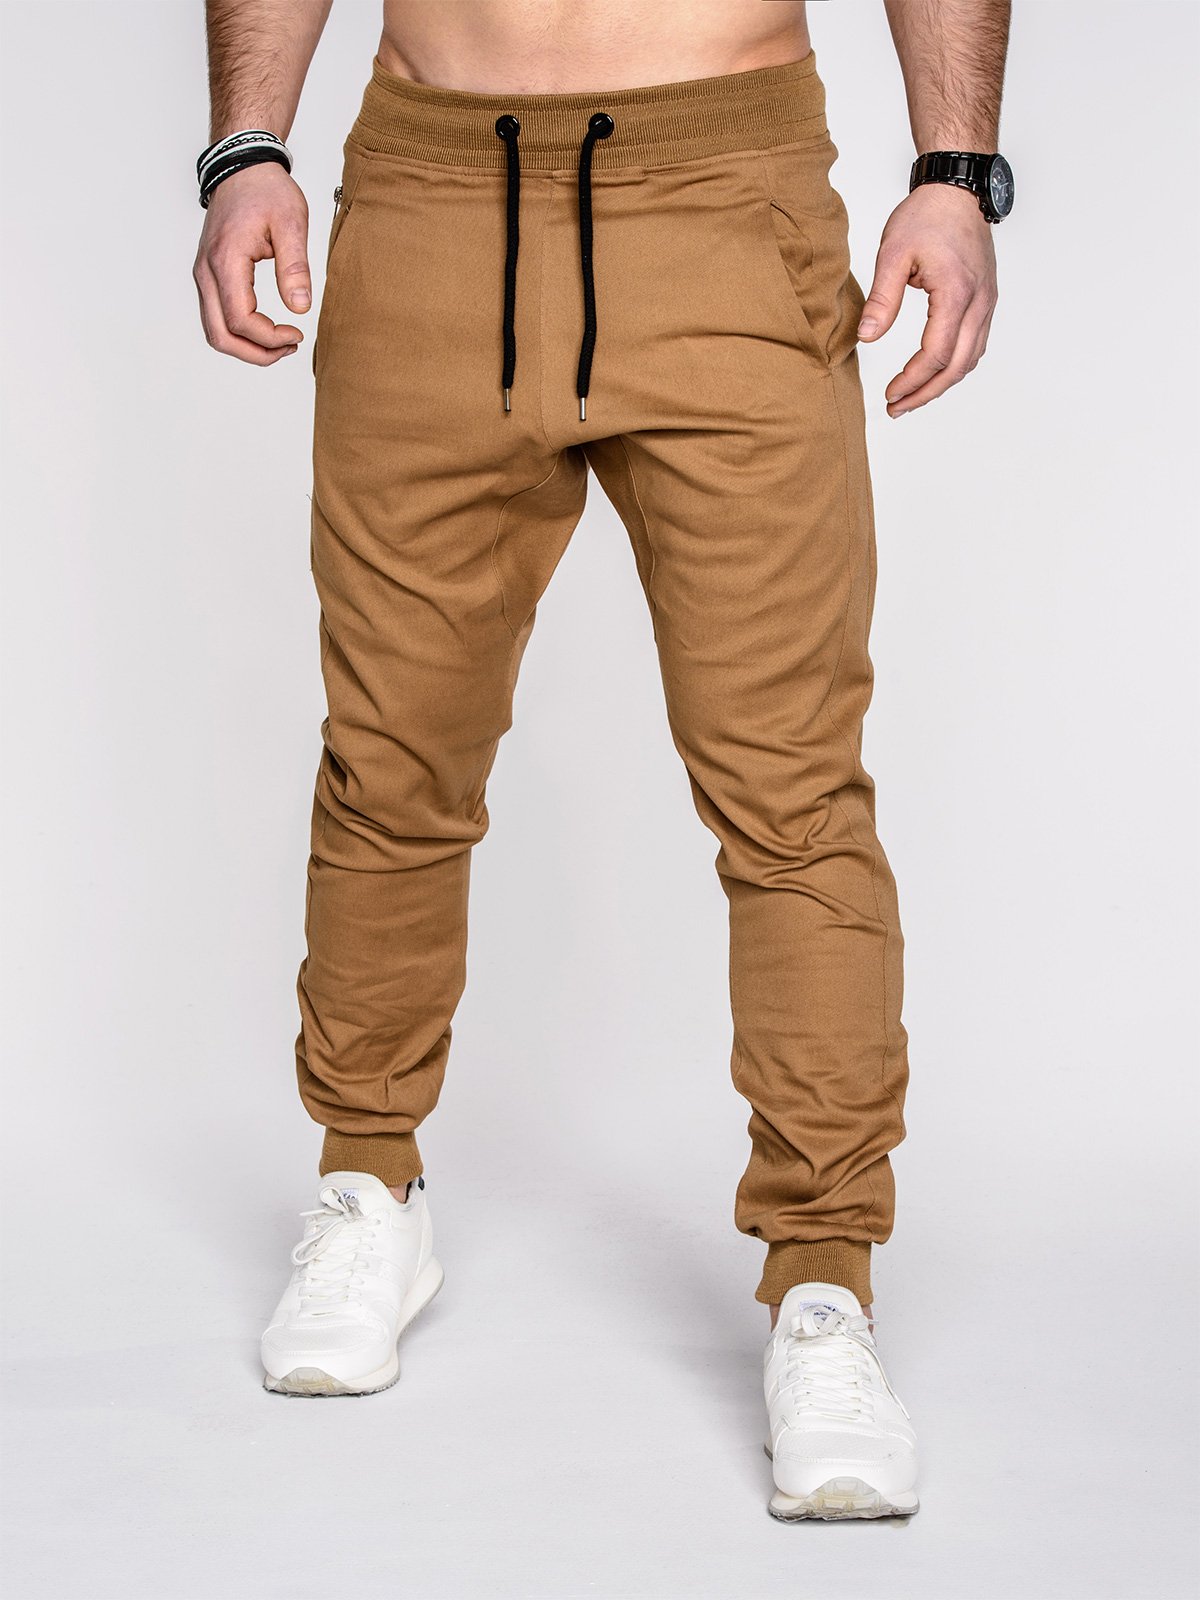 Pants P494 - camel | MODONE wholesale - Clothing For Men